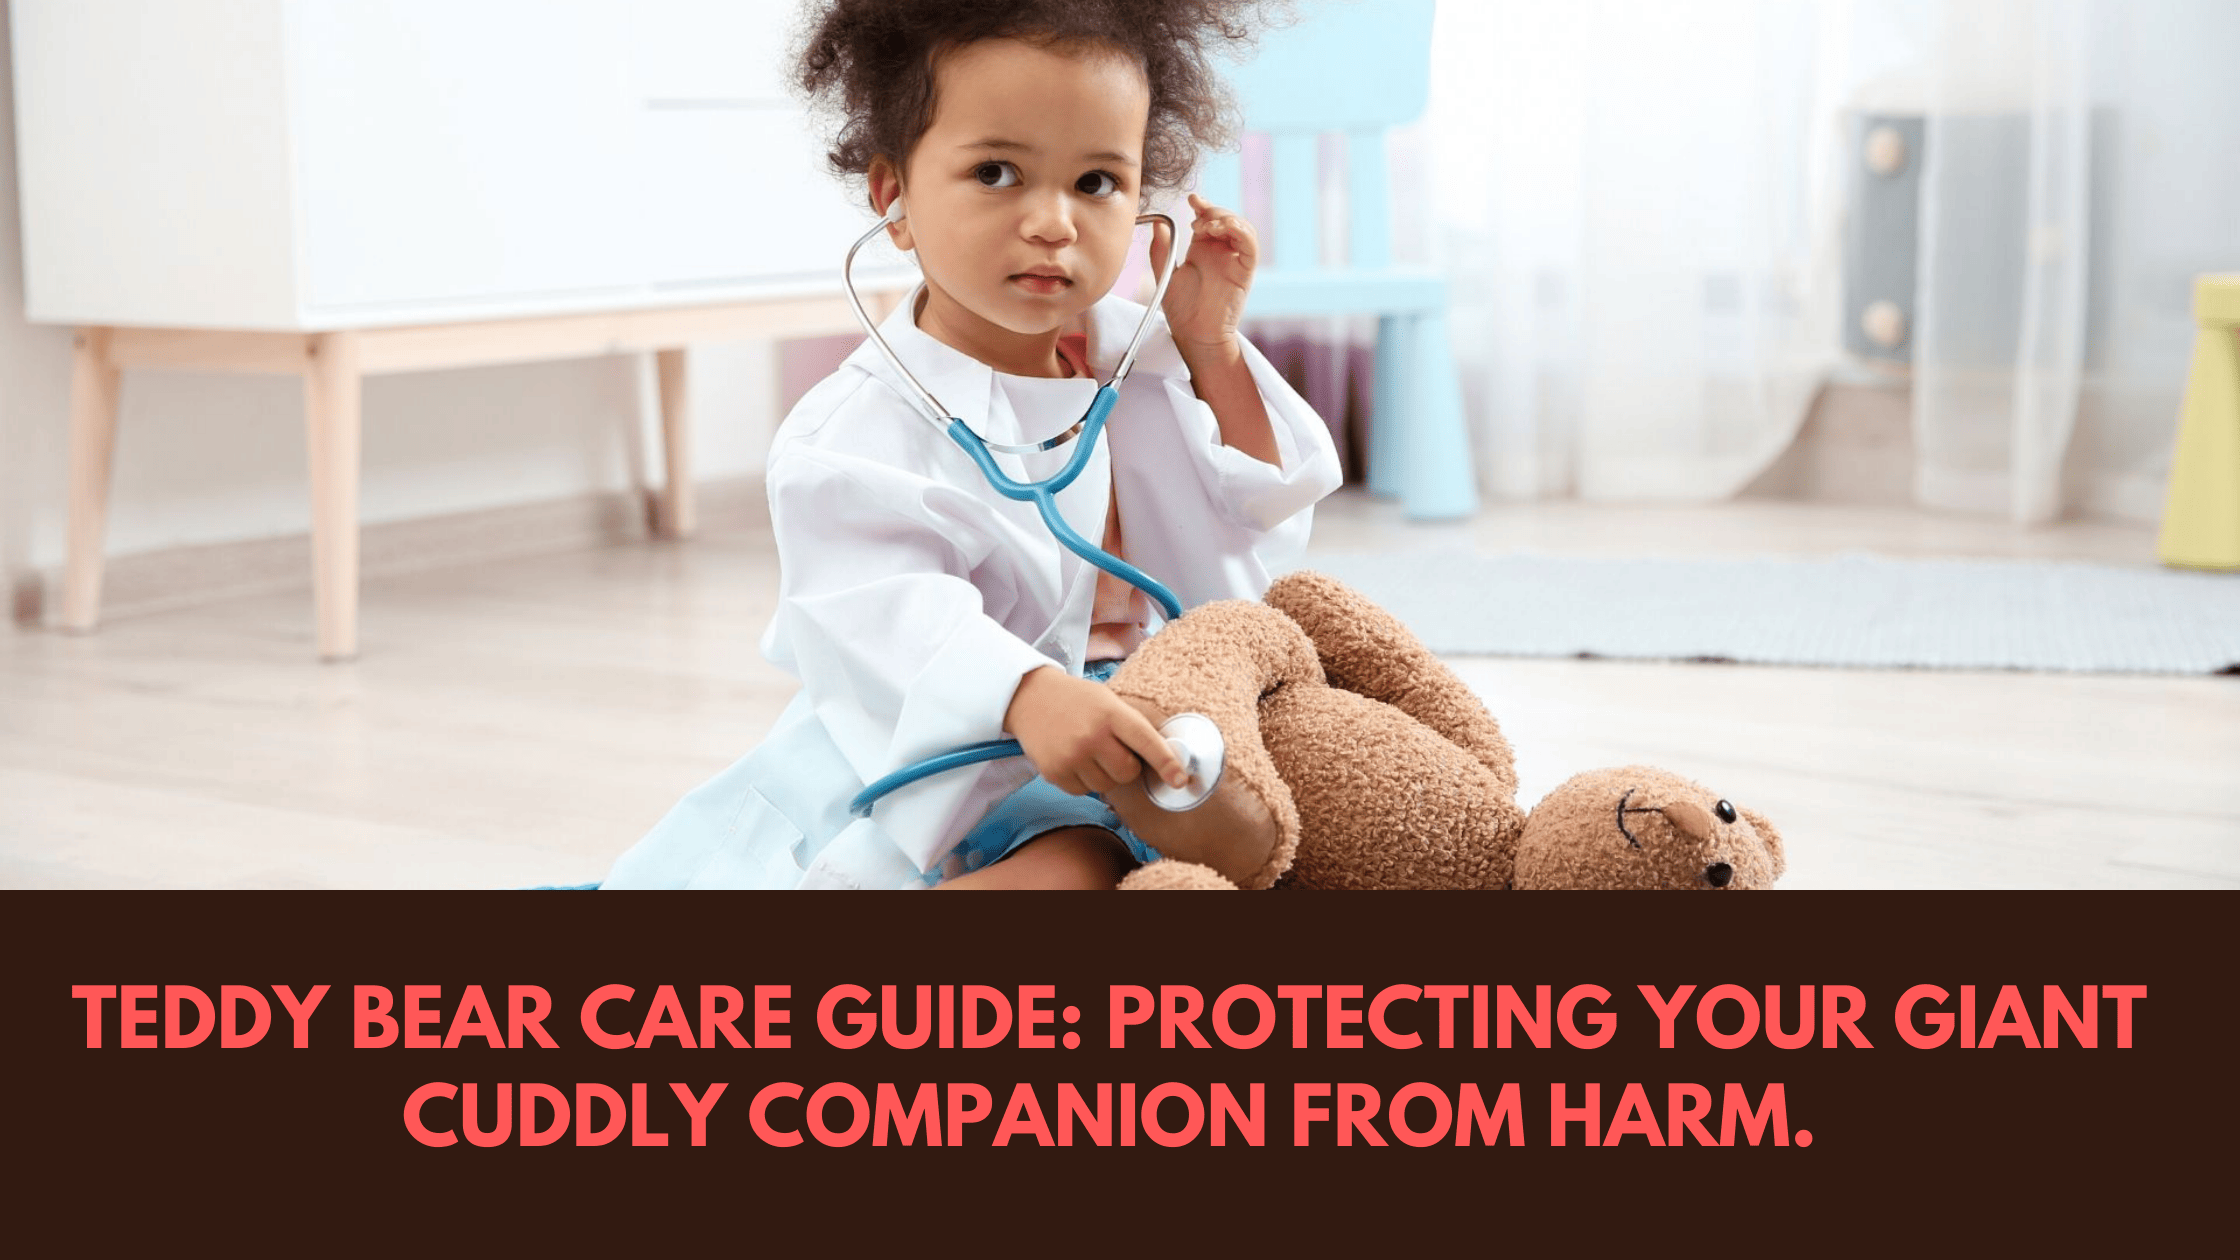 Teddy Bear Care Guide: Protecting Your Teddy Bear from Harm